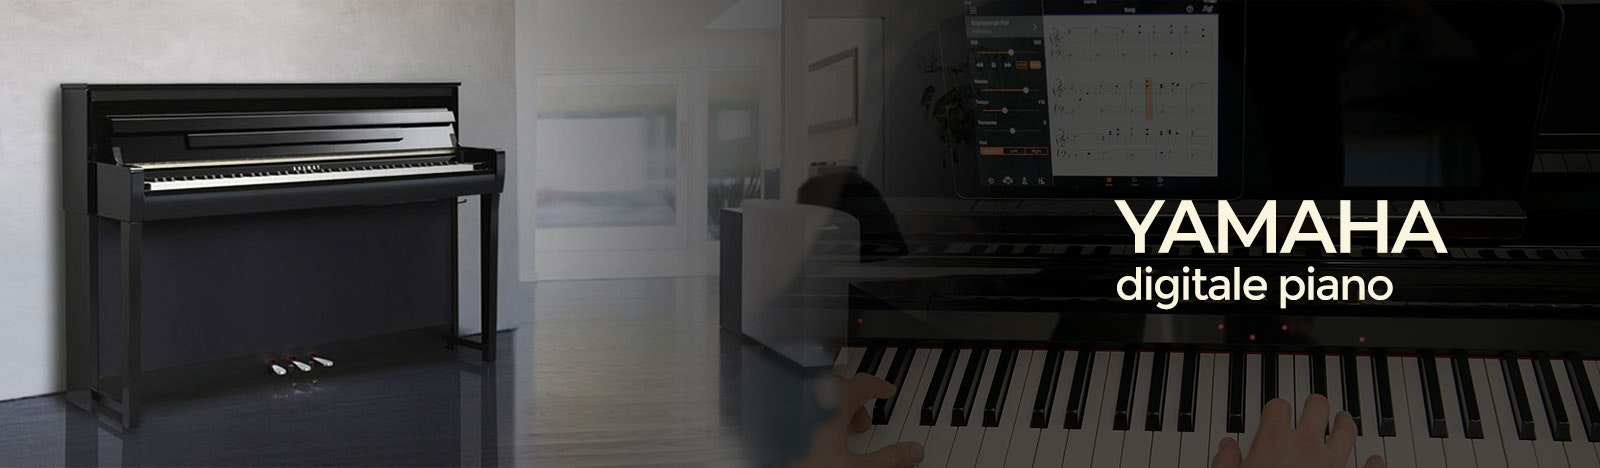 Yamaha digitale piano | Elektrische piano yamaha